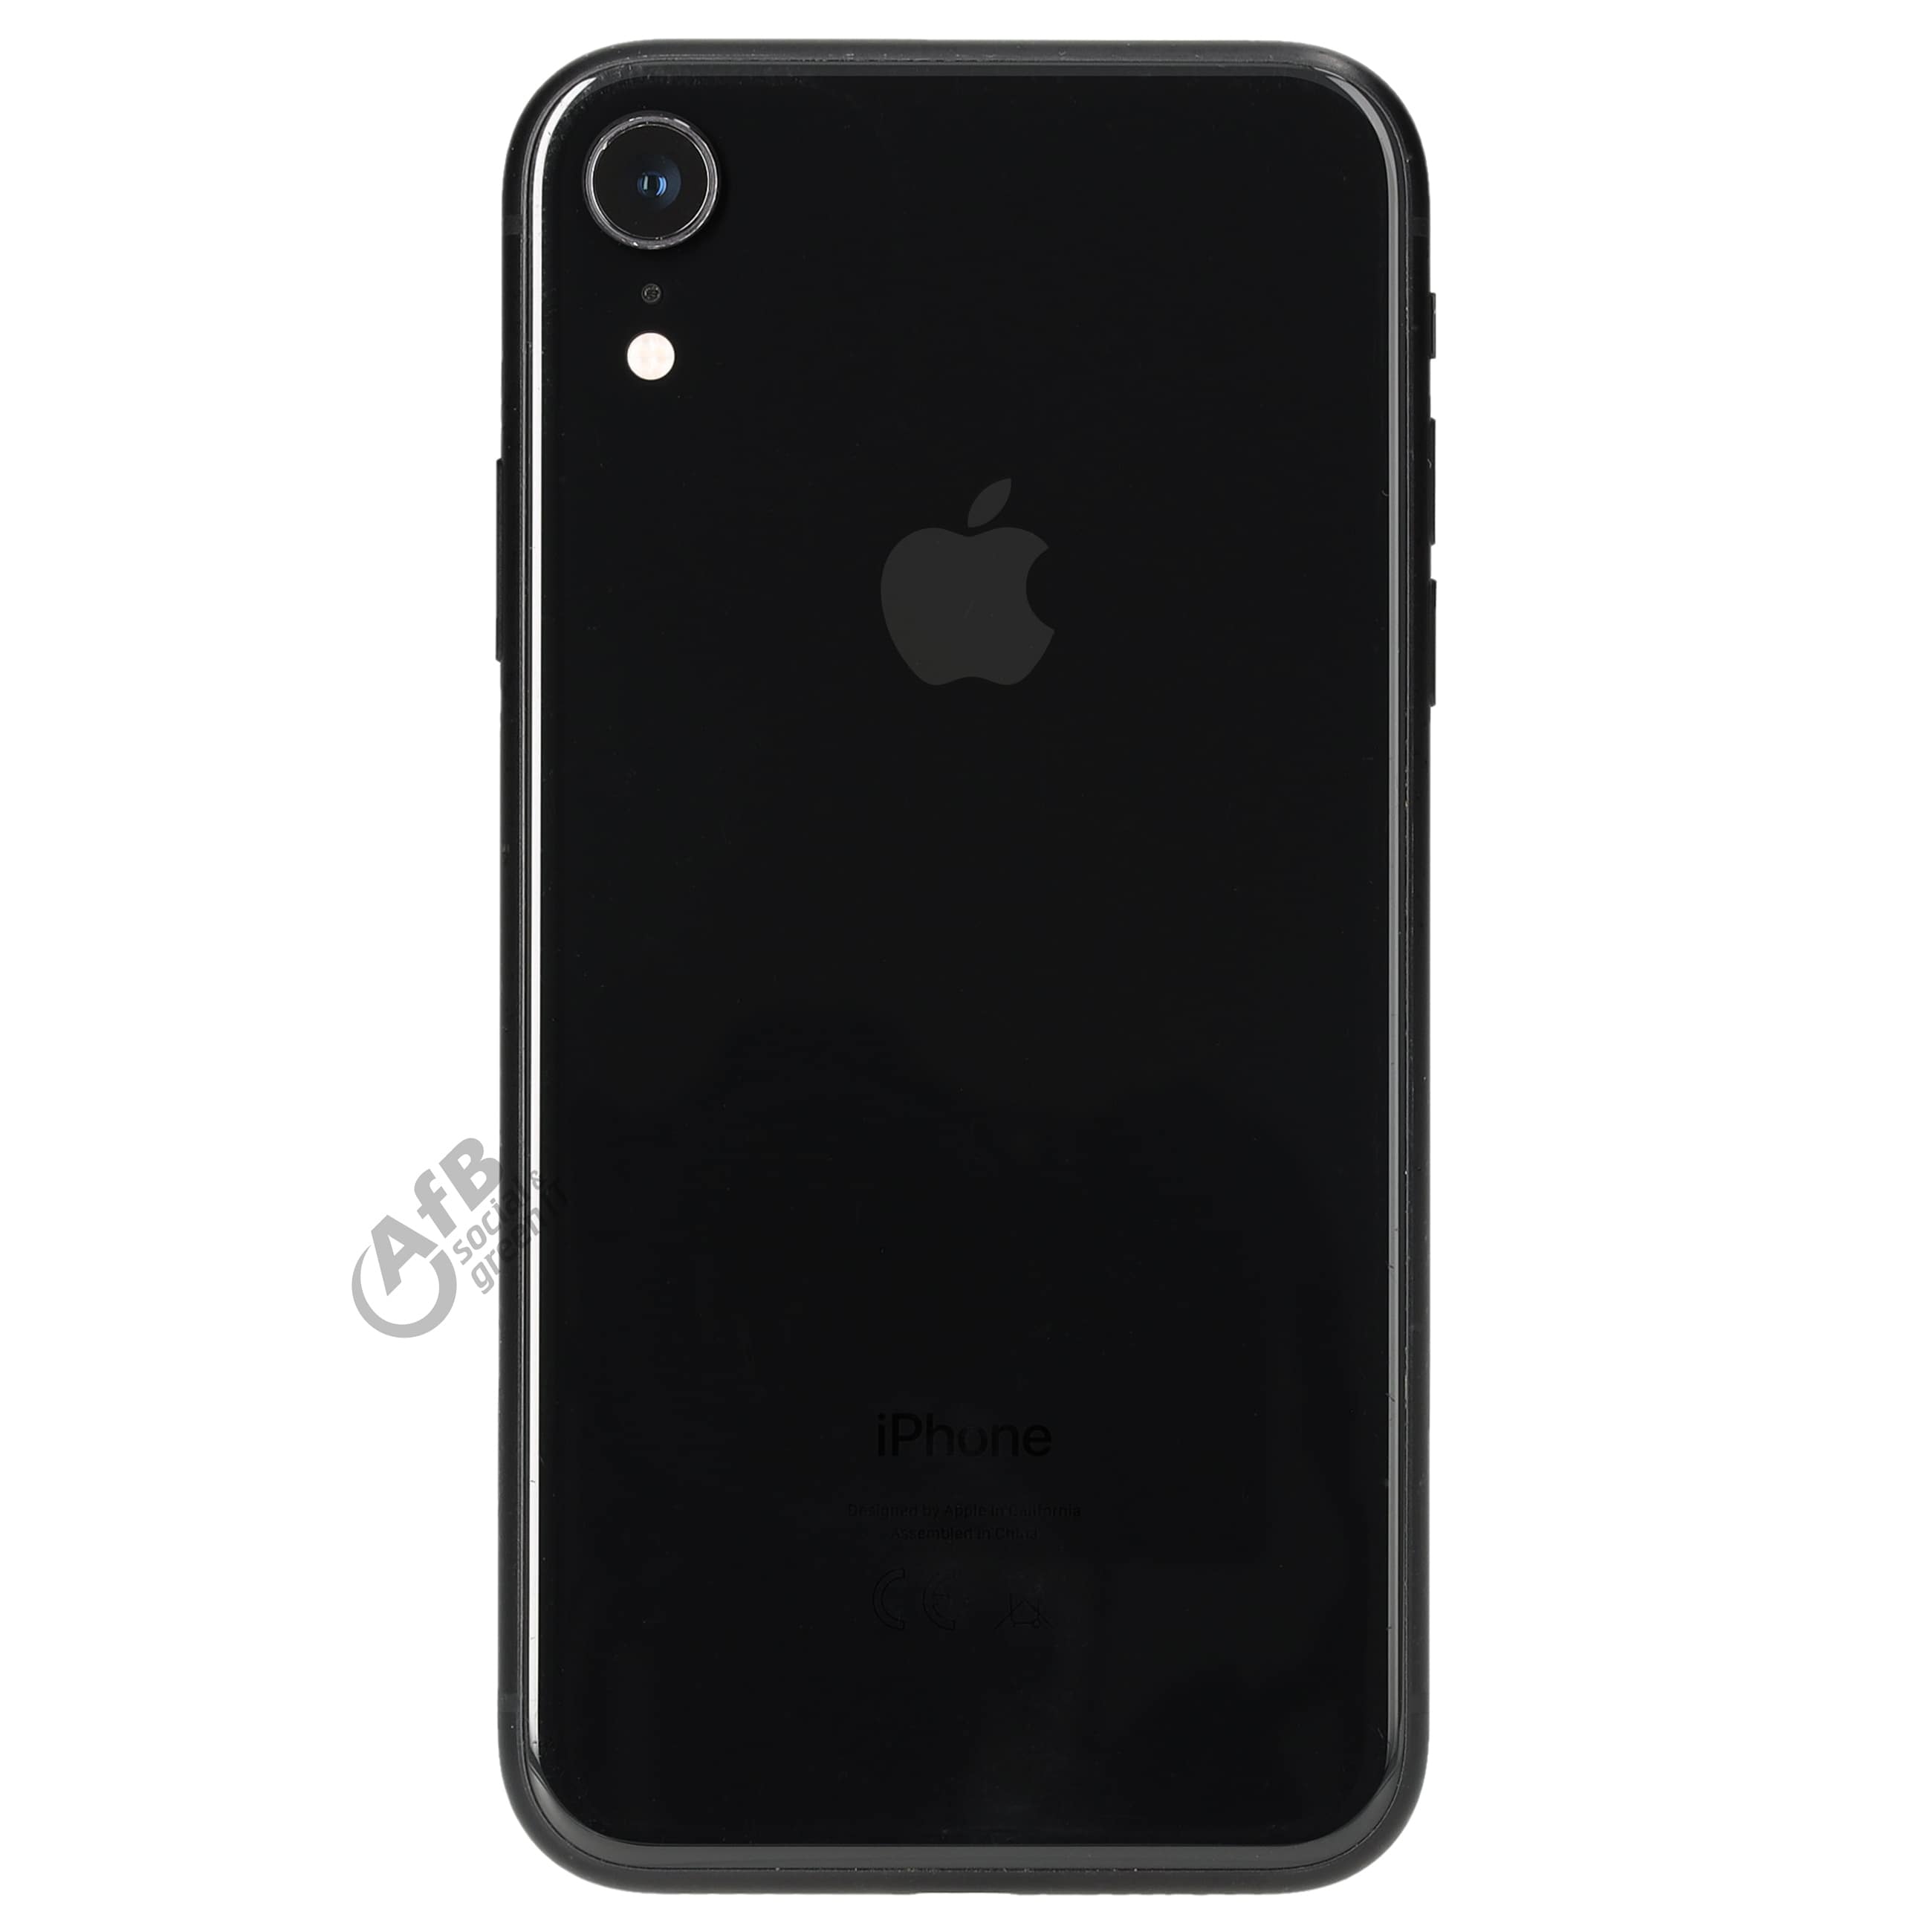 Apple iPhone XRSehr gut - AfB-refurbished